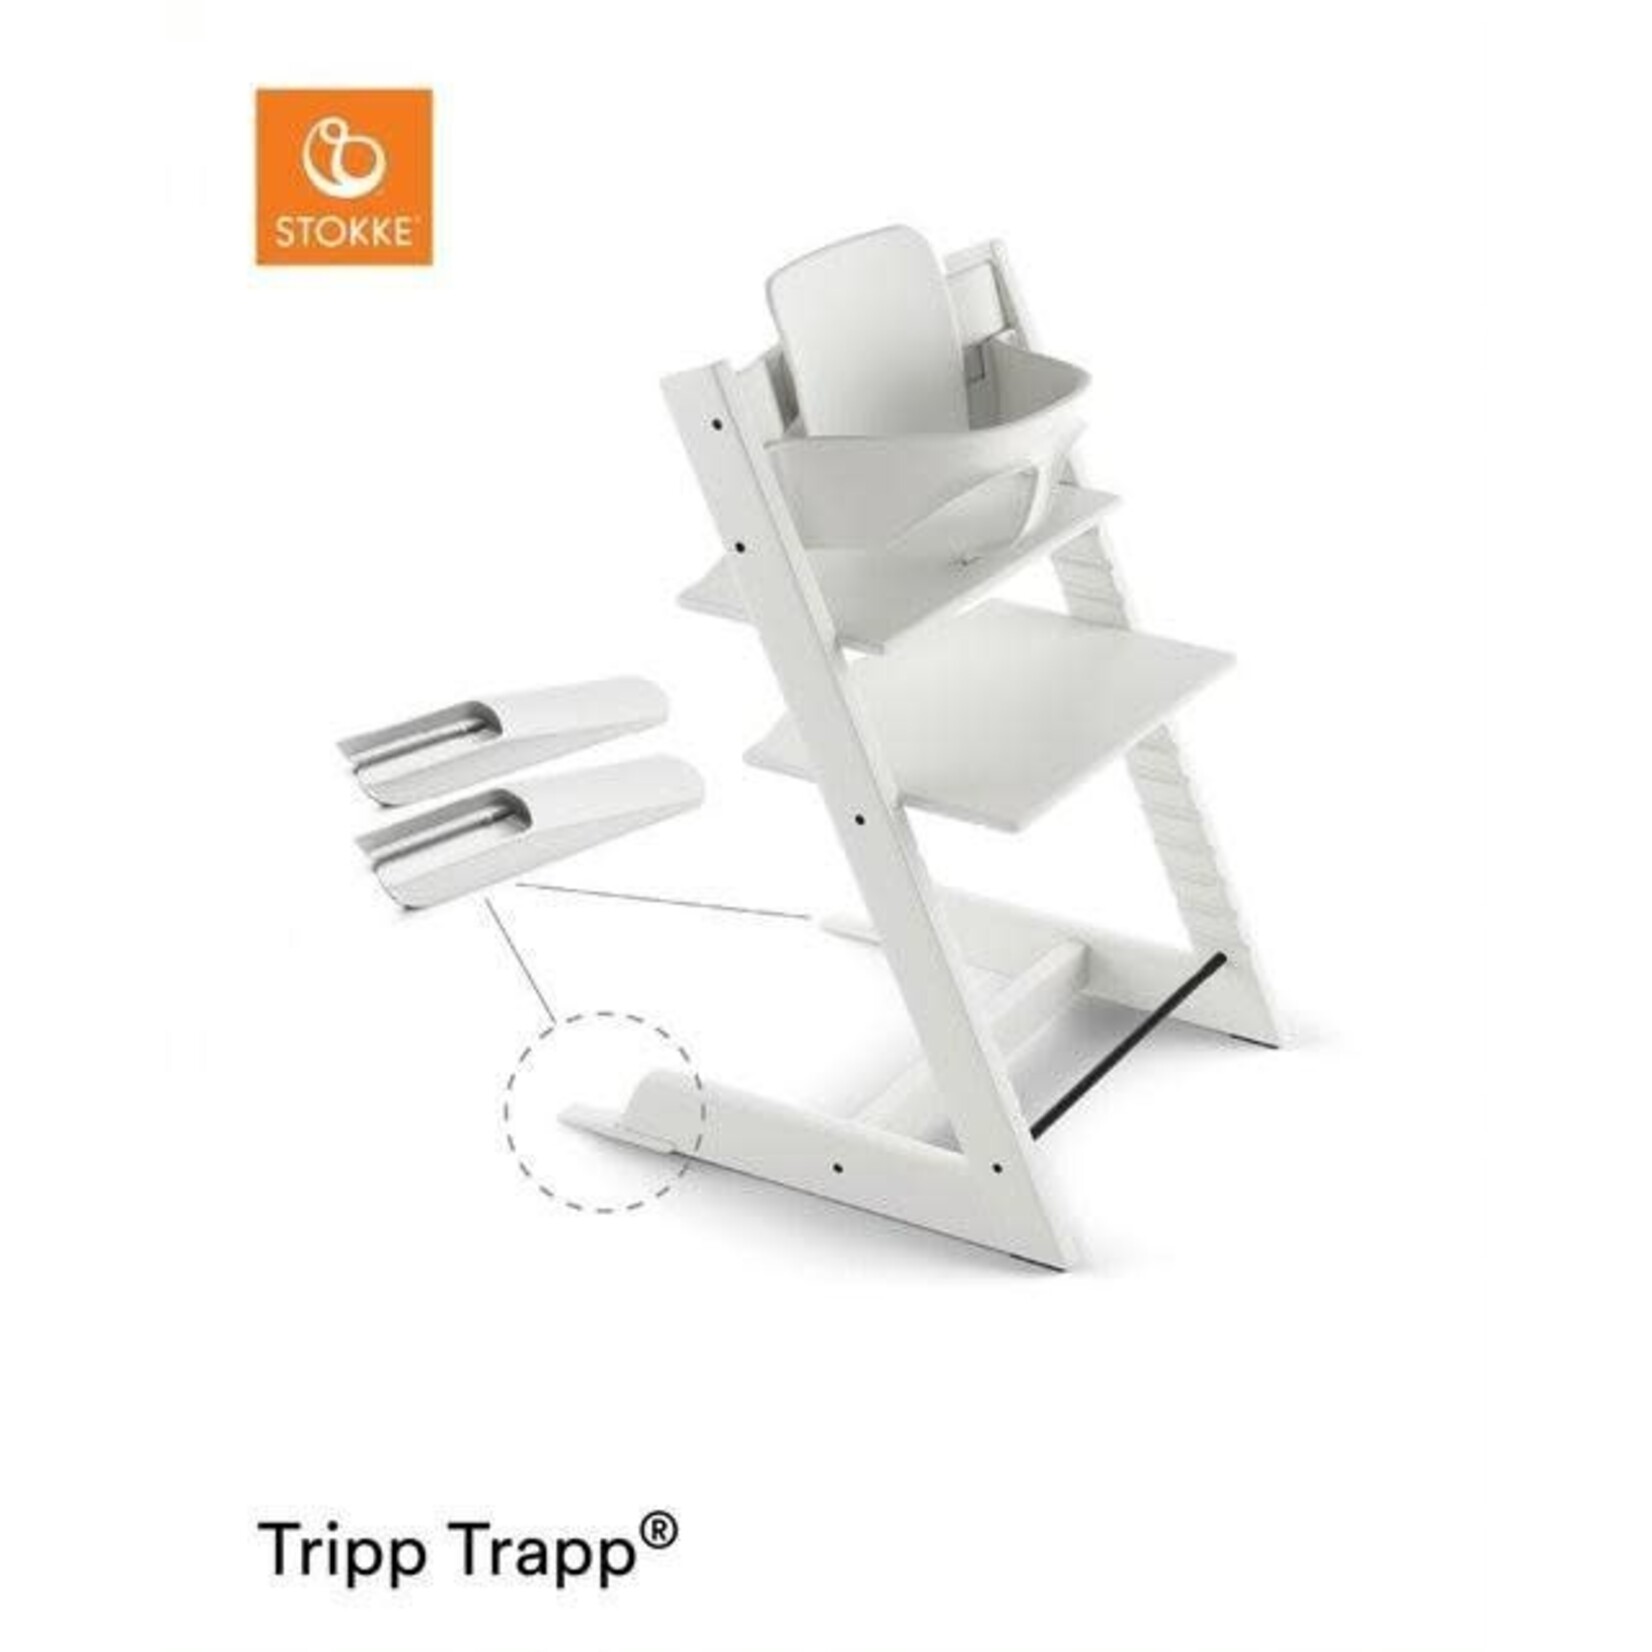 Stokke Stokke - Tripp Trapp Babyset - White